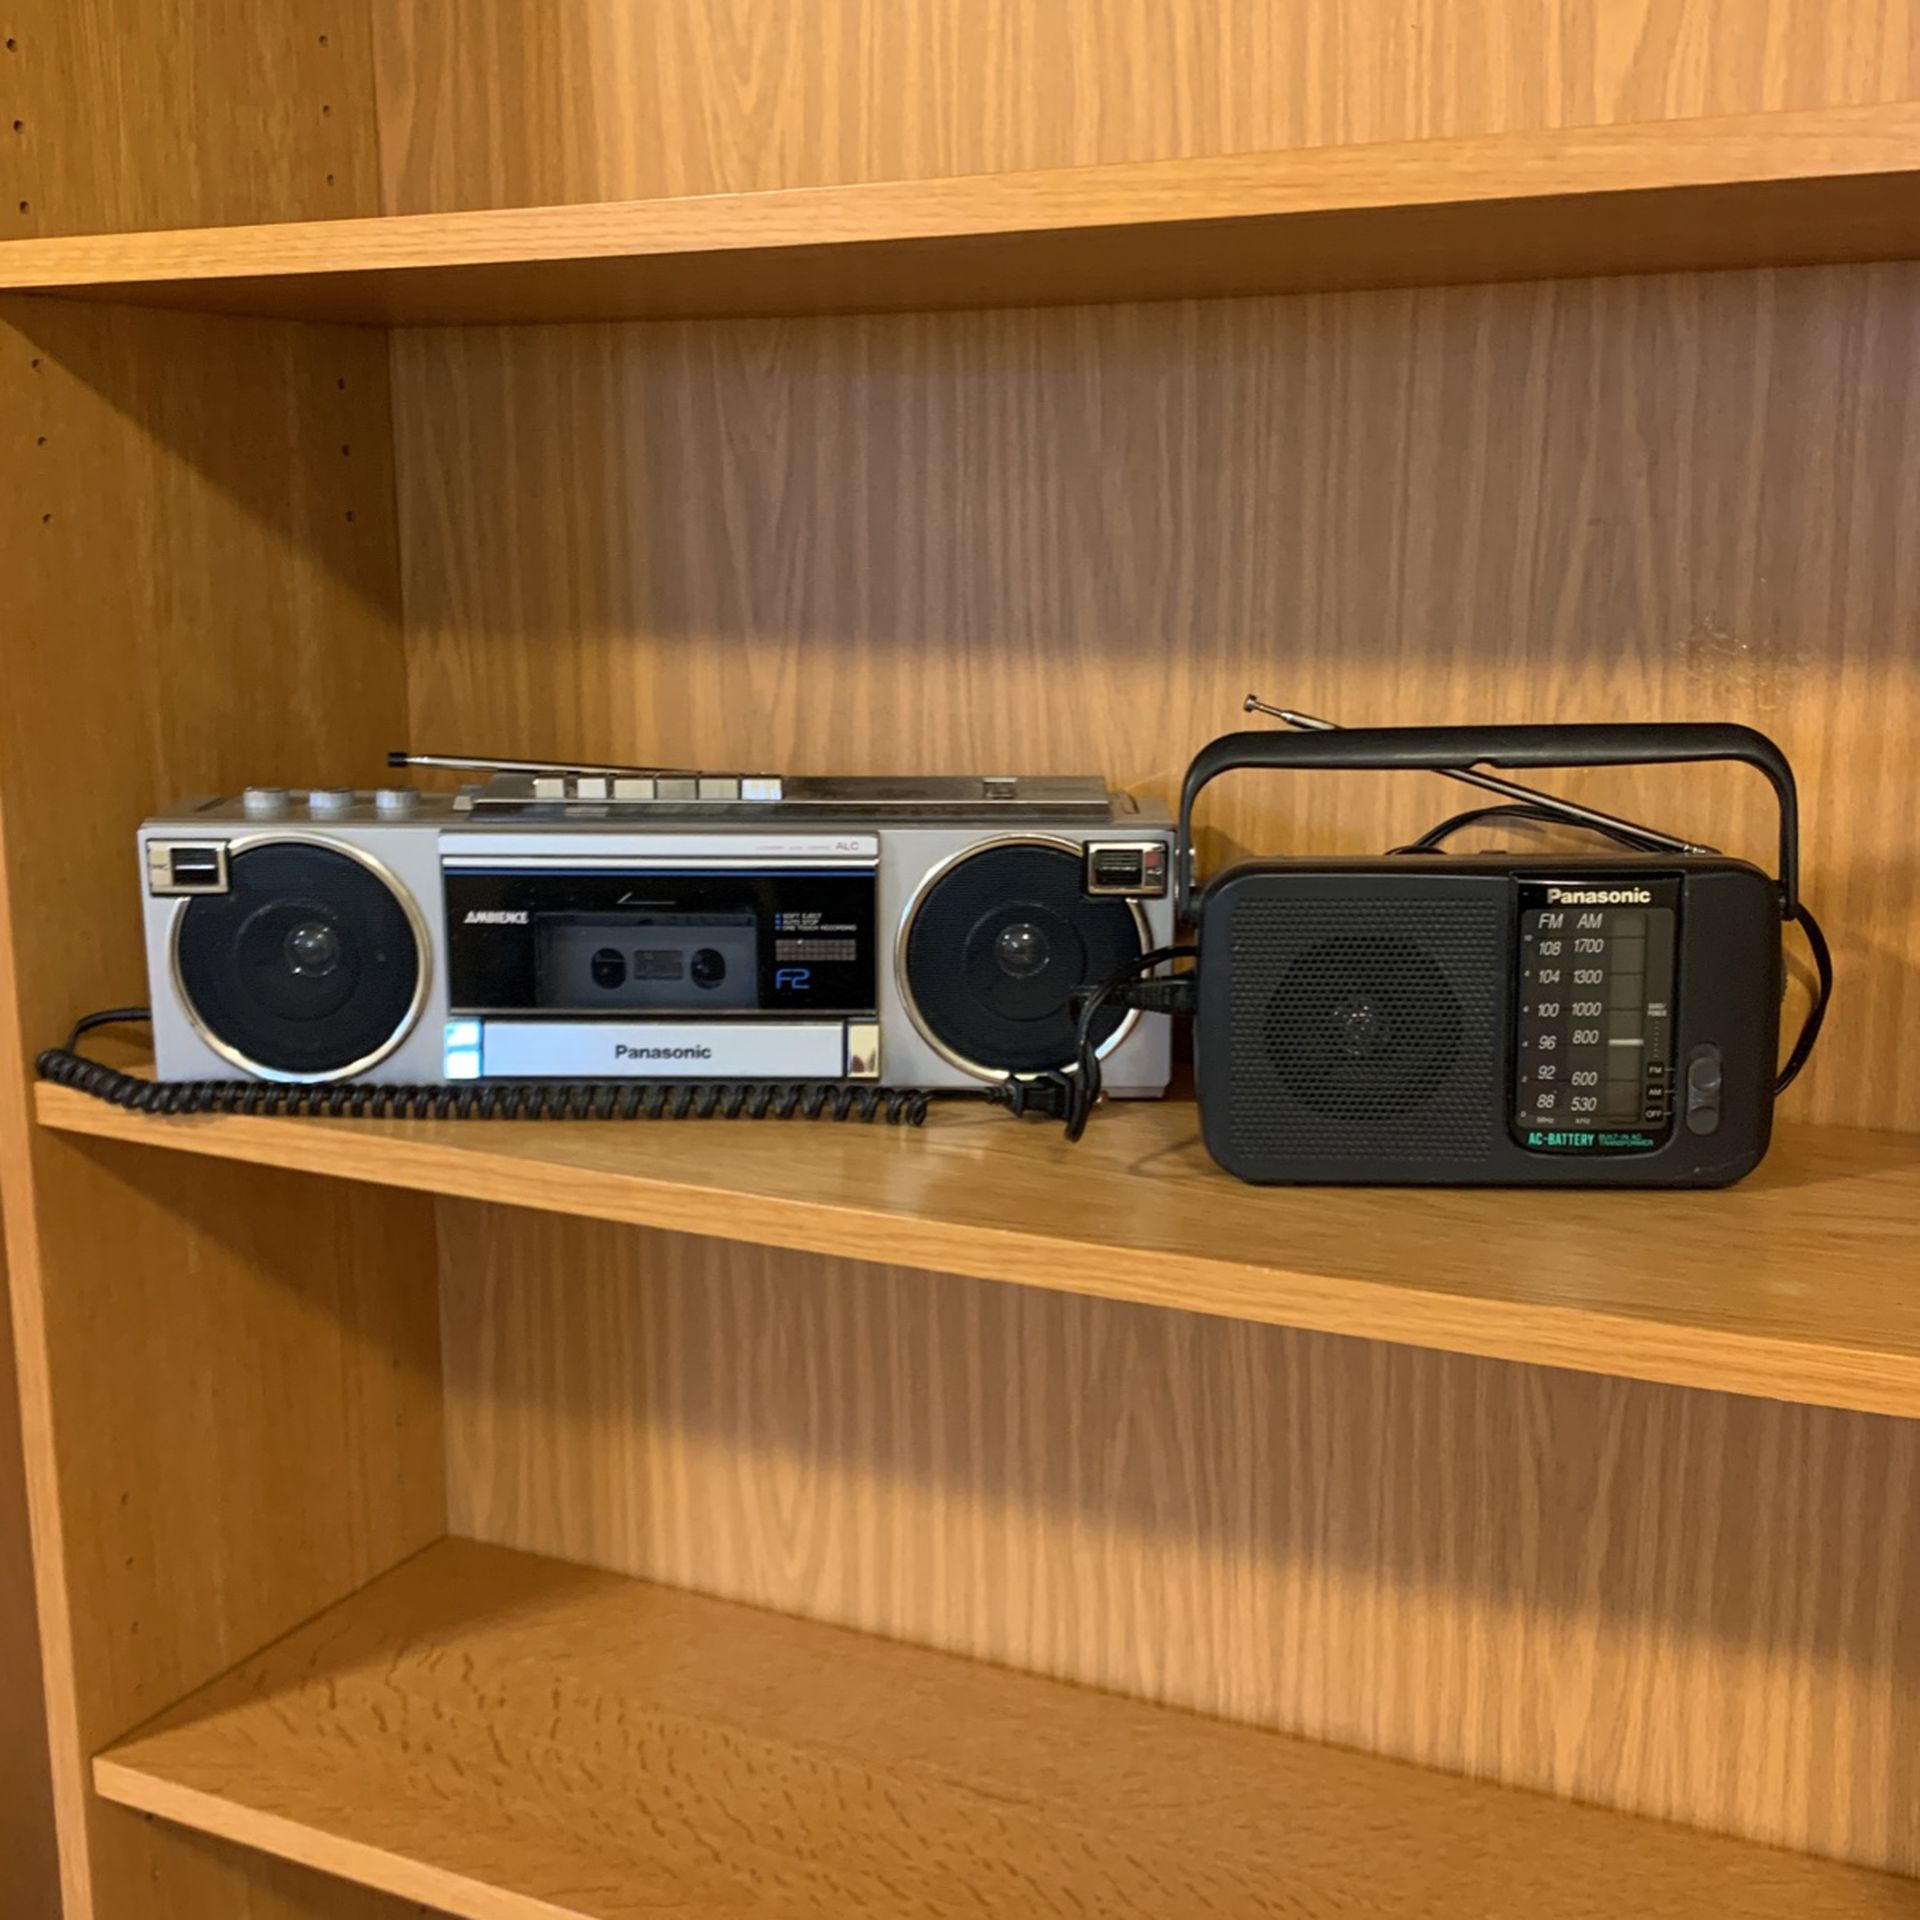 2 Panasonic Radios